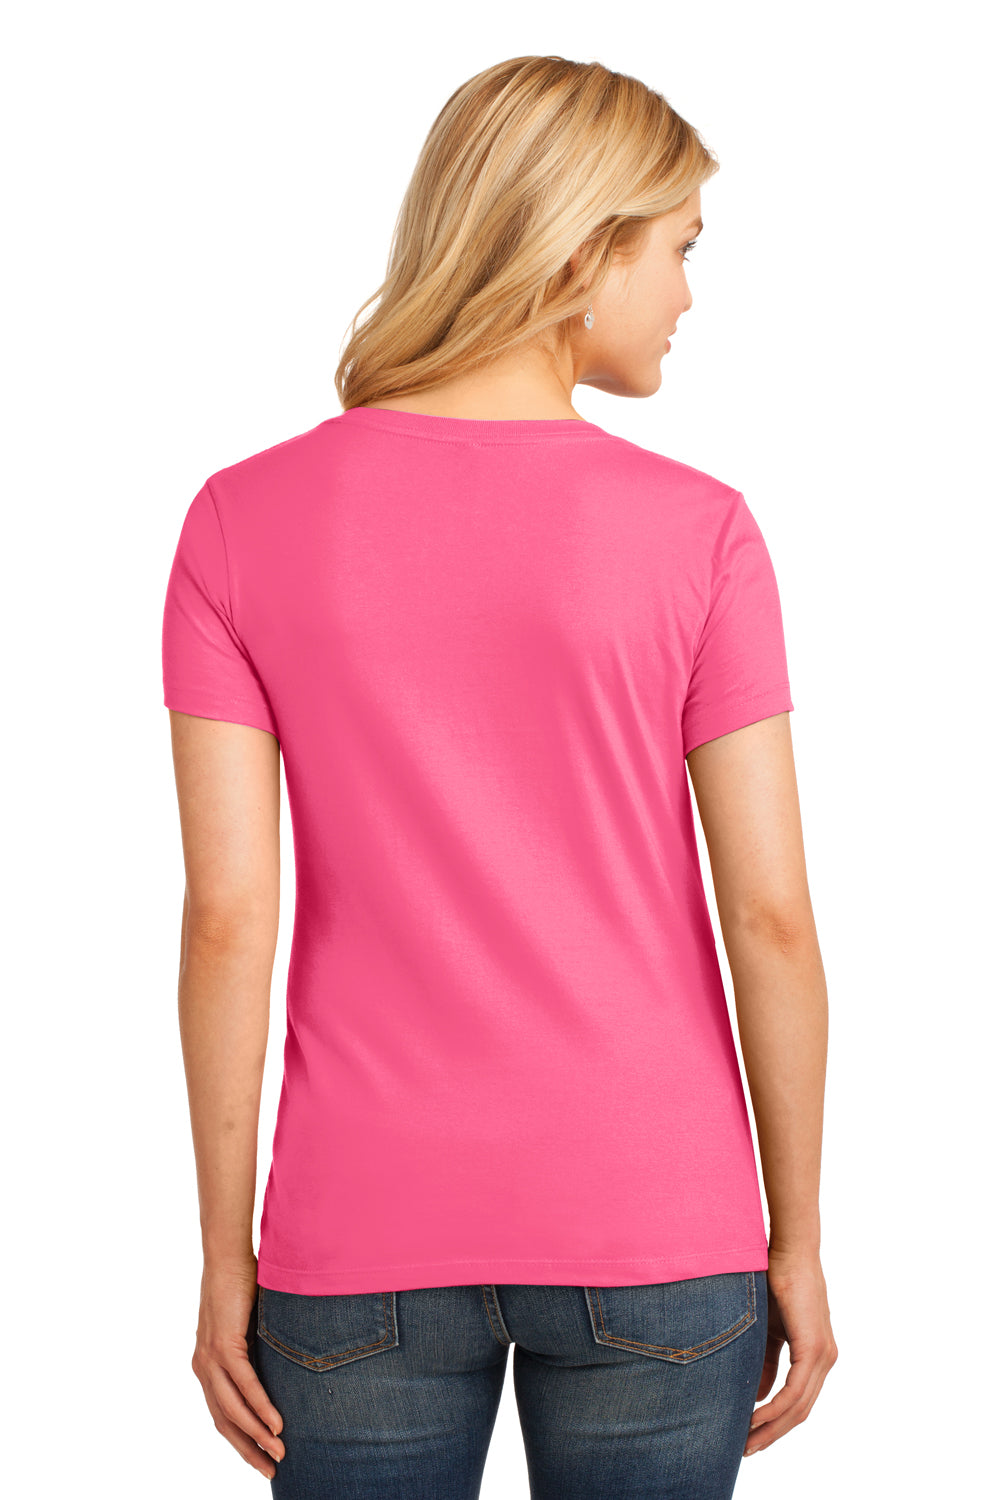 Port & Company LPC54V Womens Core Short Sleeve V-Neck T-Shirt Neon Pink Back